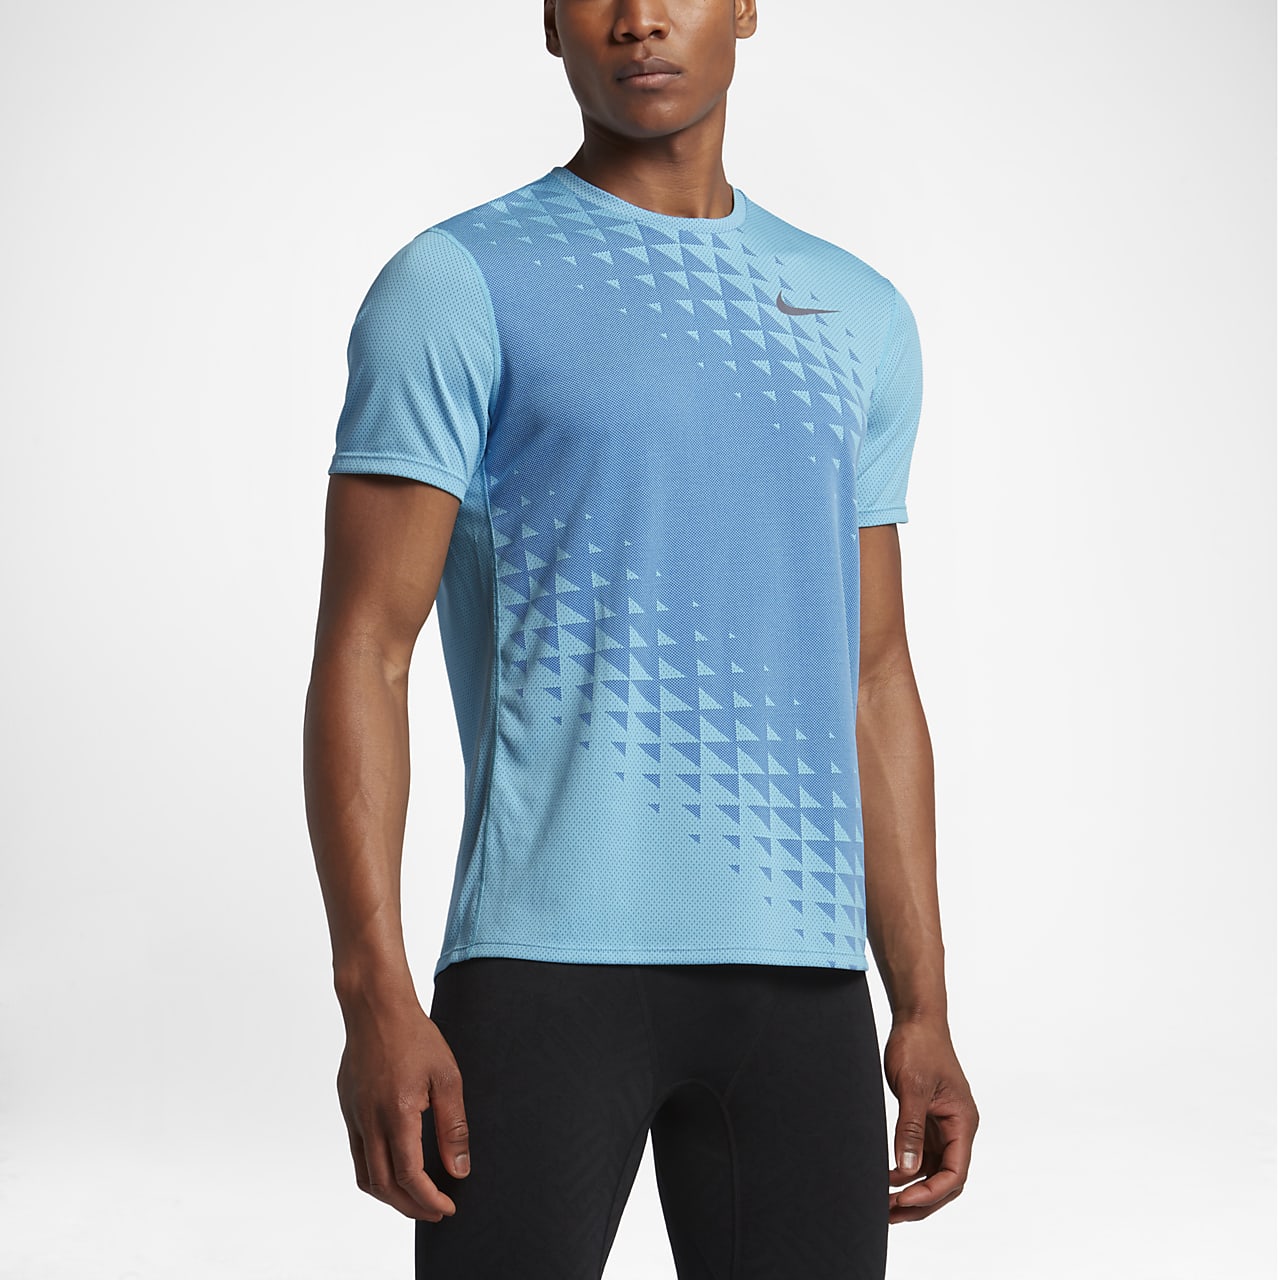 Nike Zonal Cooling Relay Graphic Men's Running Top. Nike